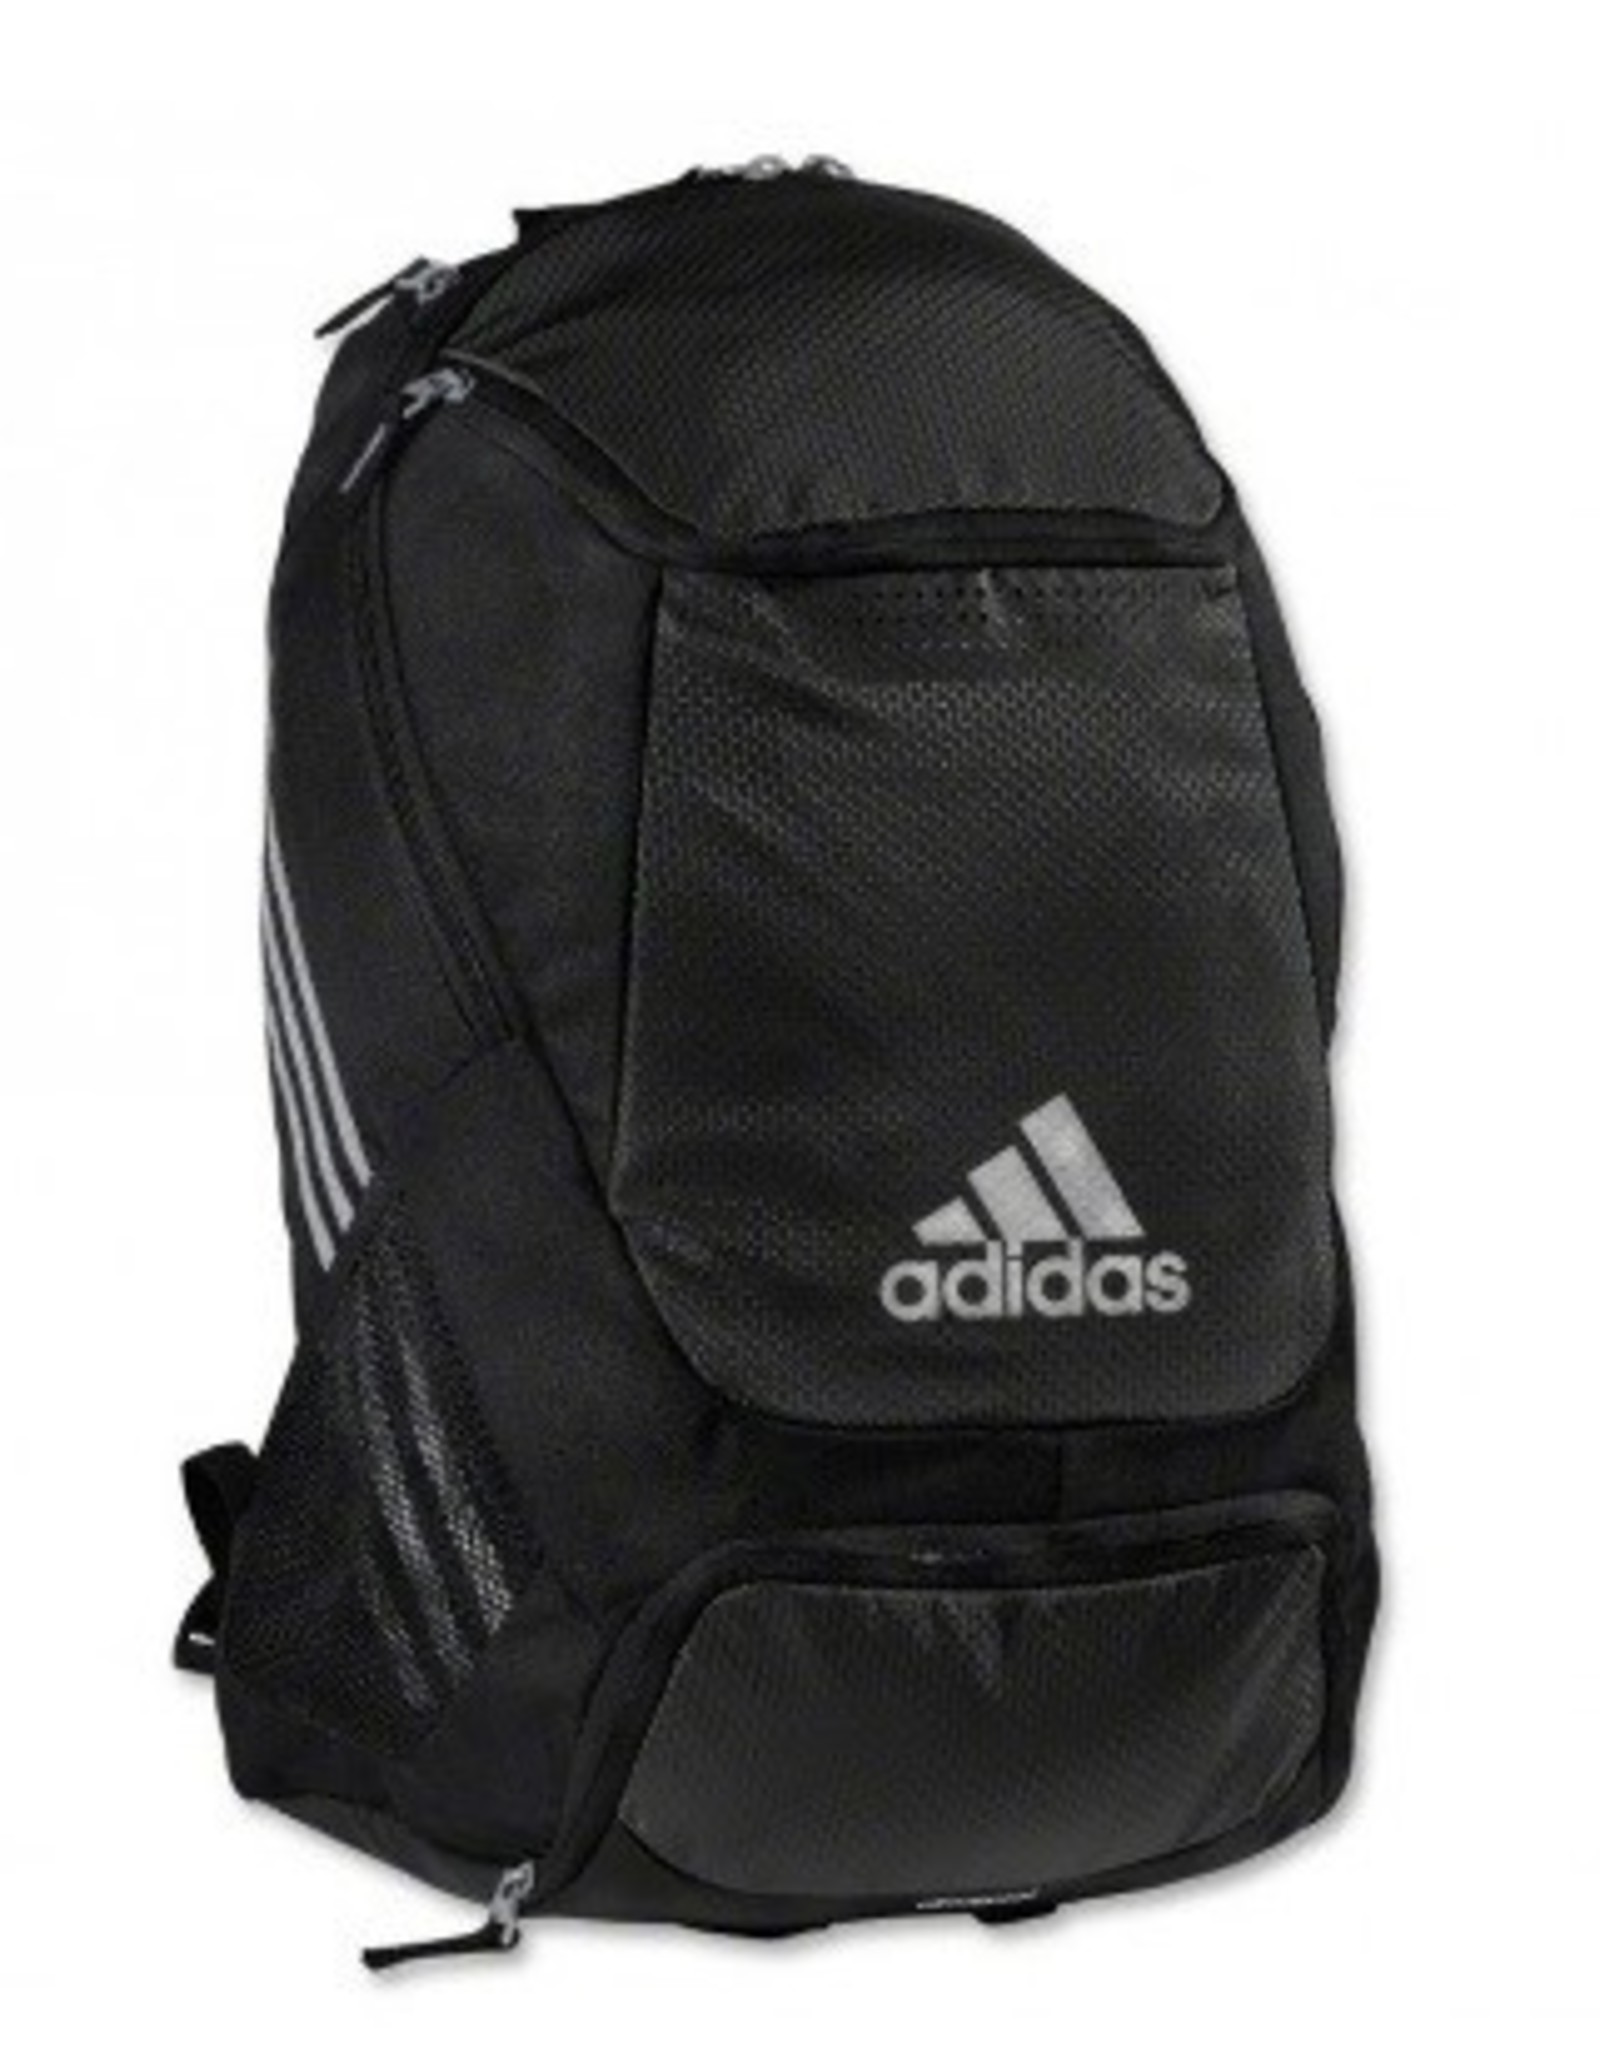 Adidas Adidas Stadium Team Bag